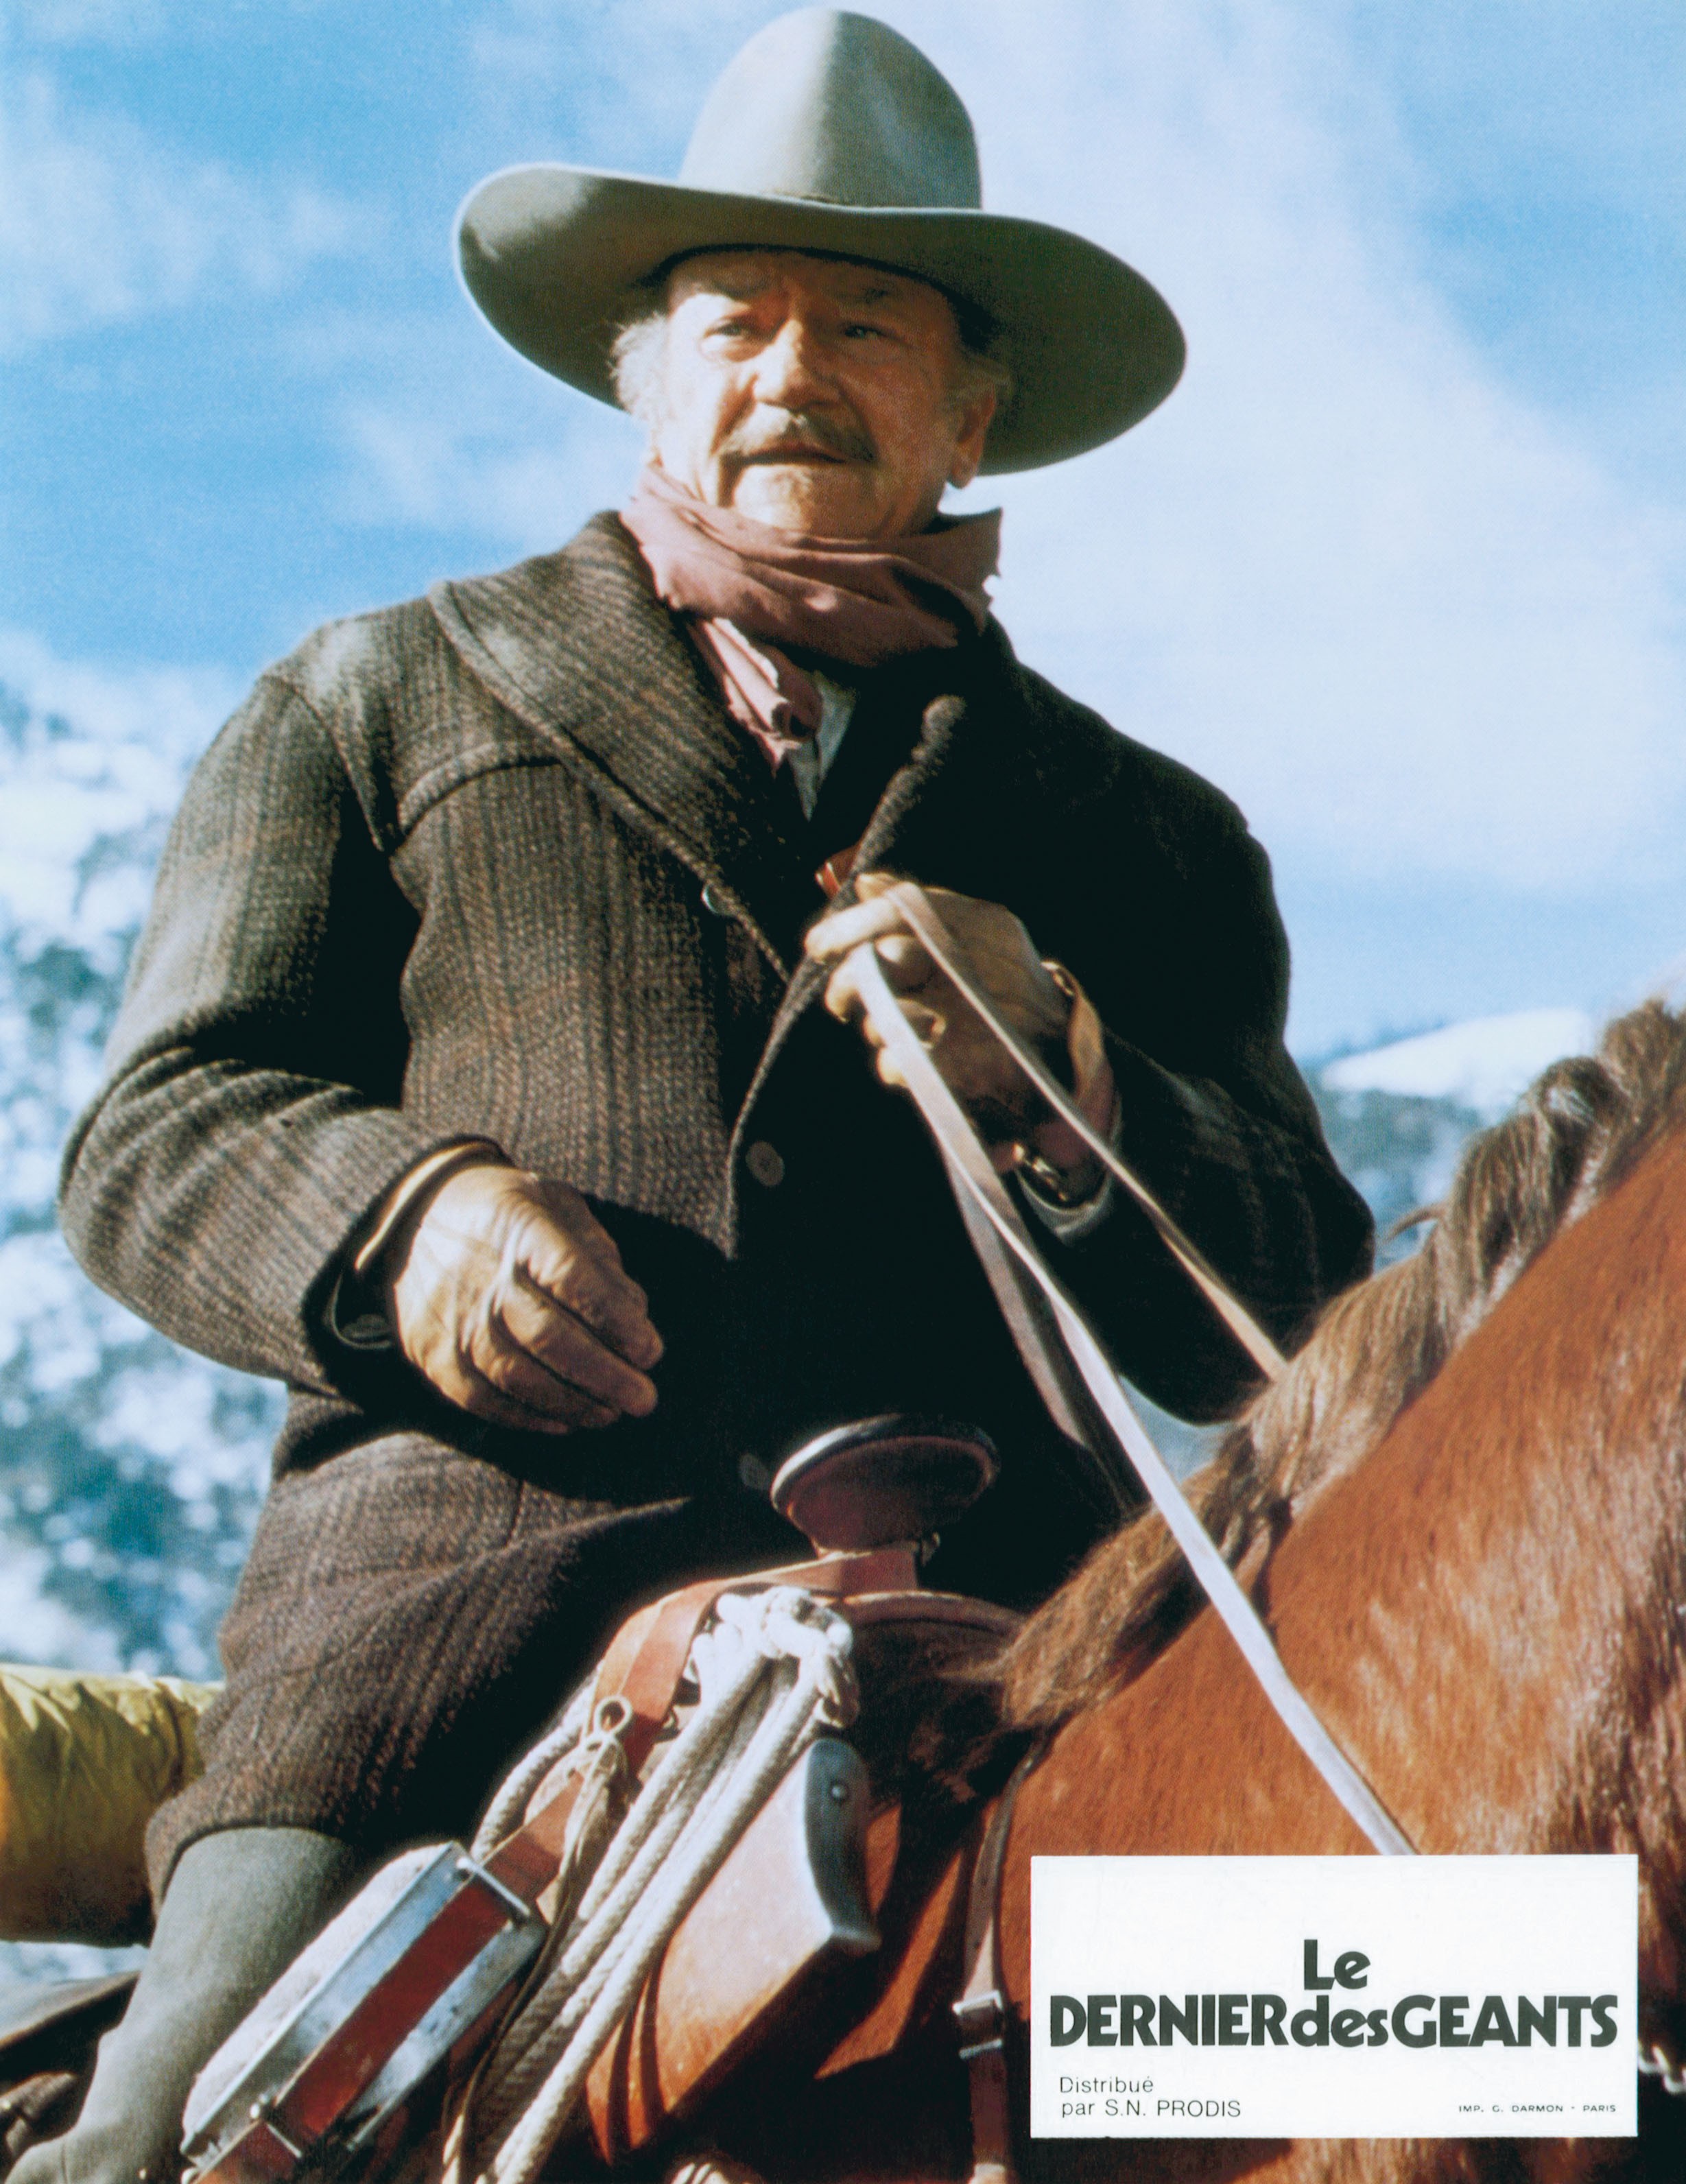 John Wayne in film "The Shootist", 1976. | Source: Getty Images